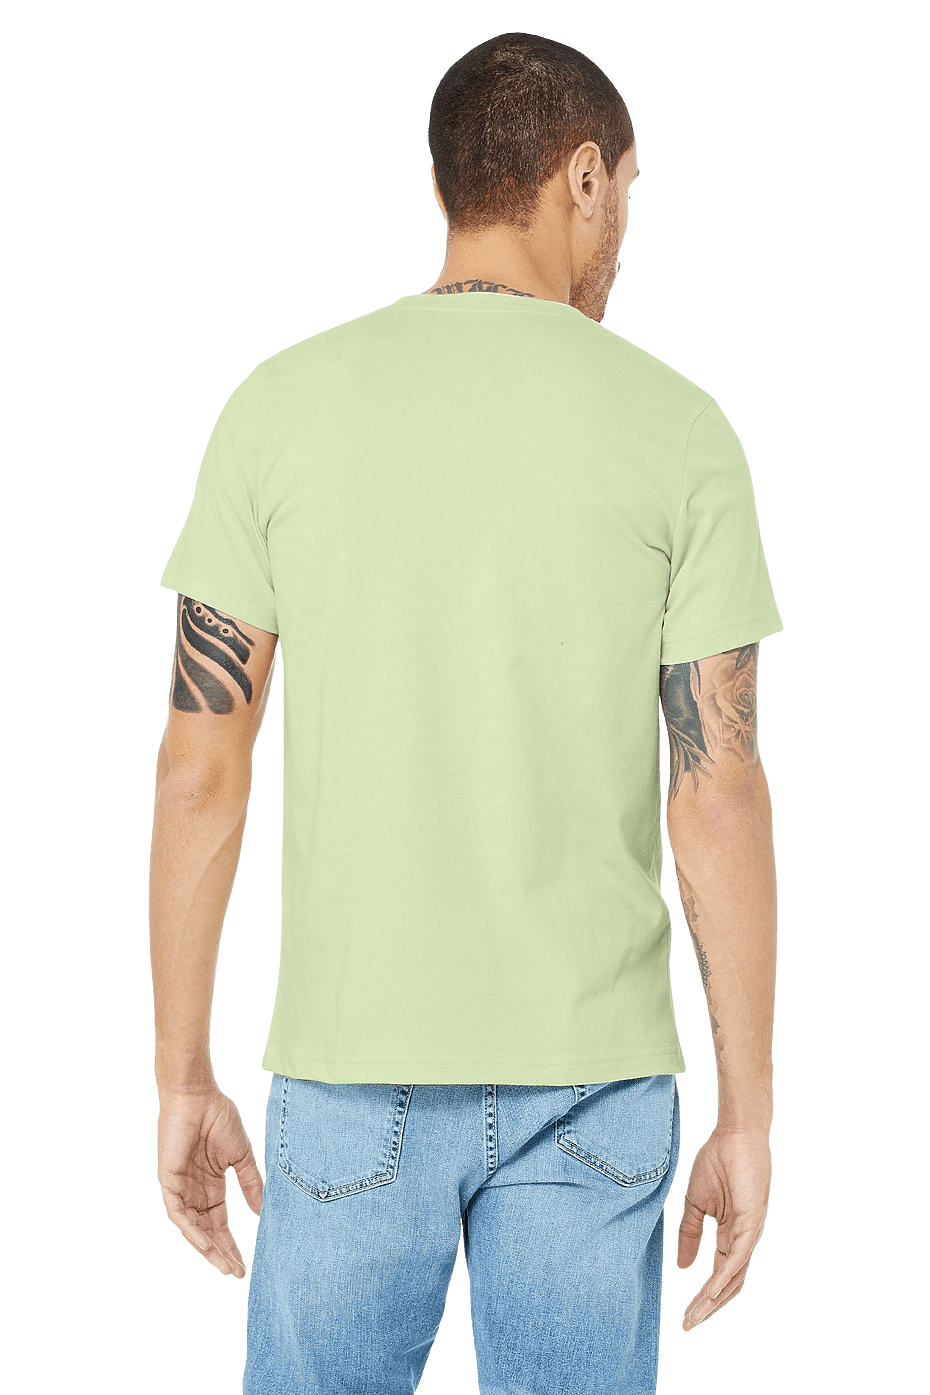 Kimaran Design T-Shirt Butterfly Wings Art Work Unisex Jersey Short Sleeve Tee (Military Green M), Adult Unisex, Size: Medium